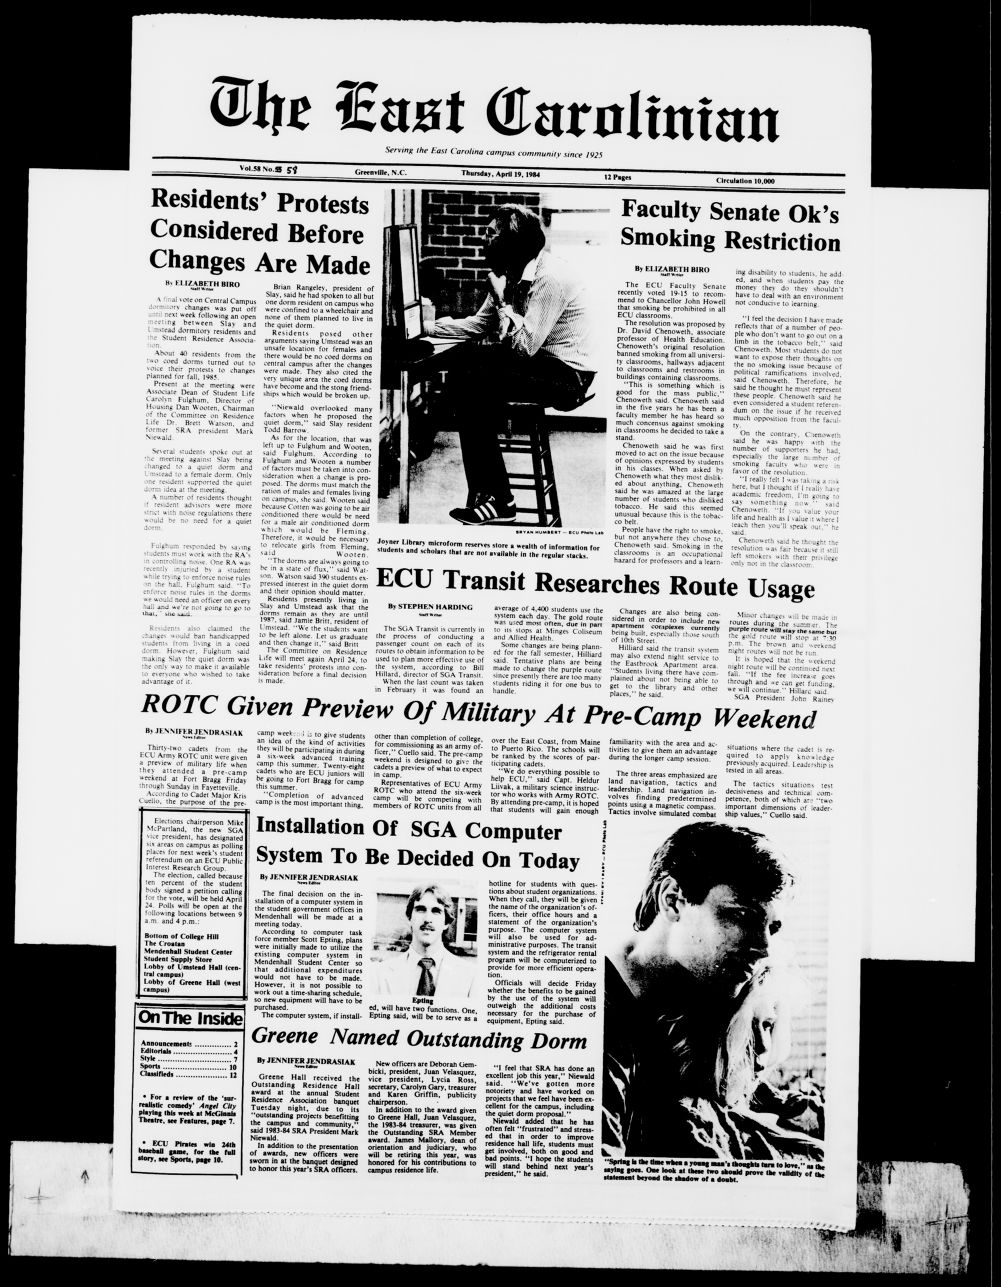 The East Carolinian, April 19, 1984 pic